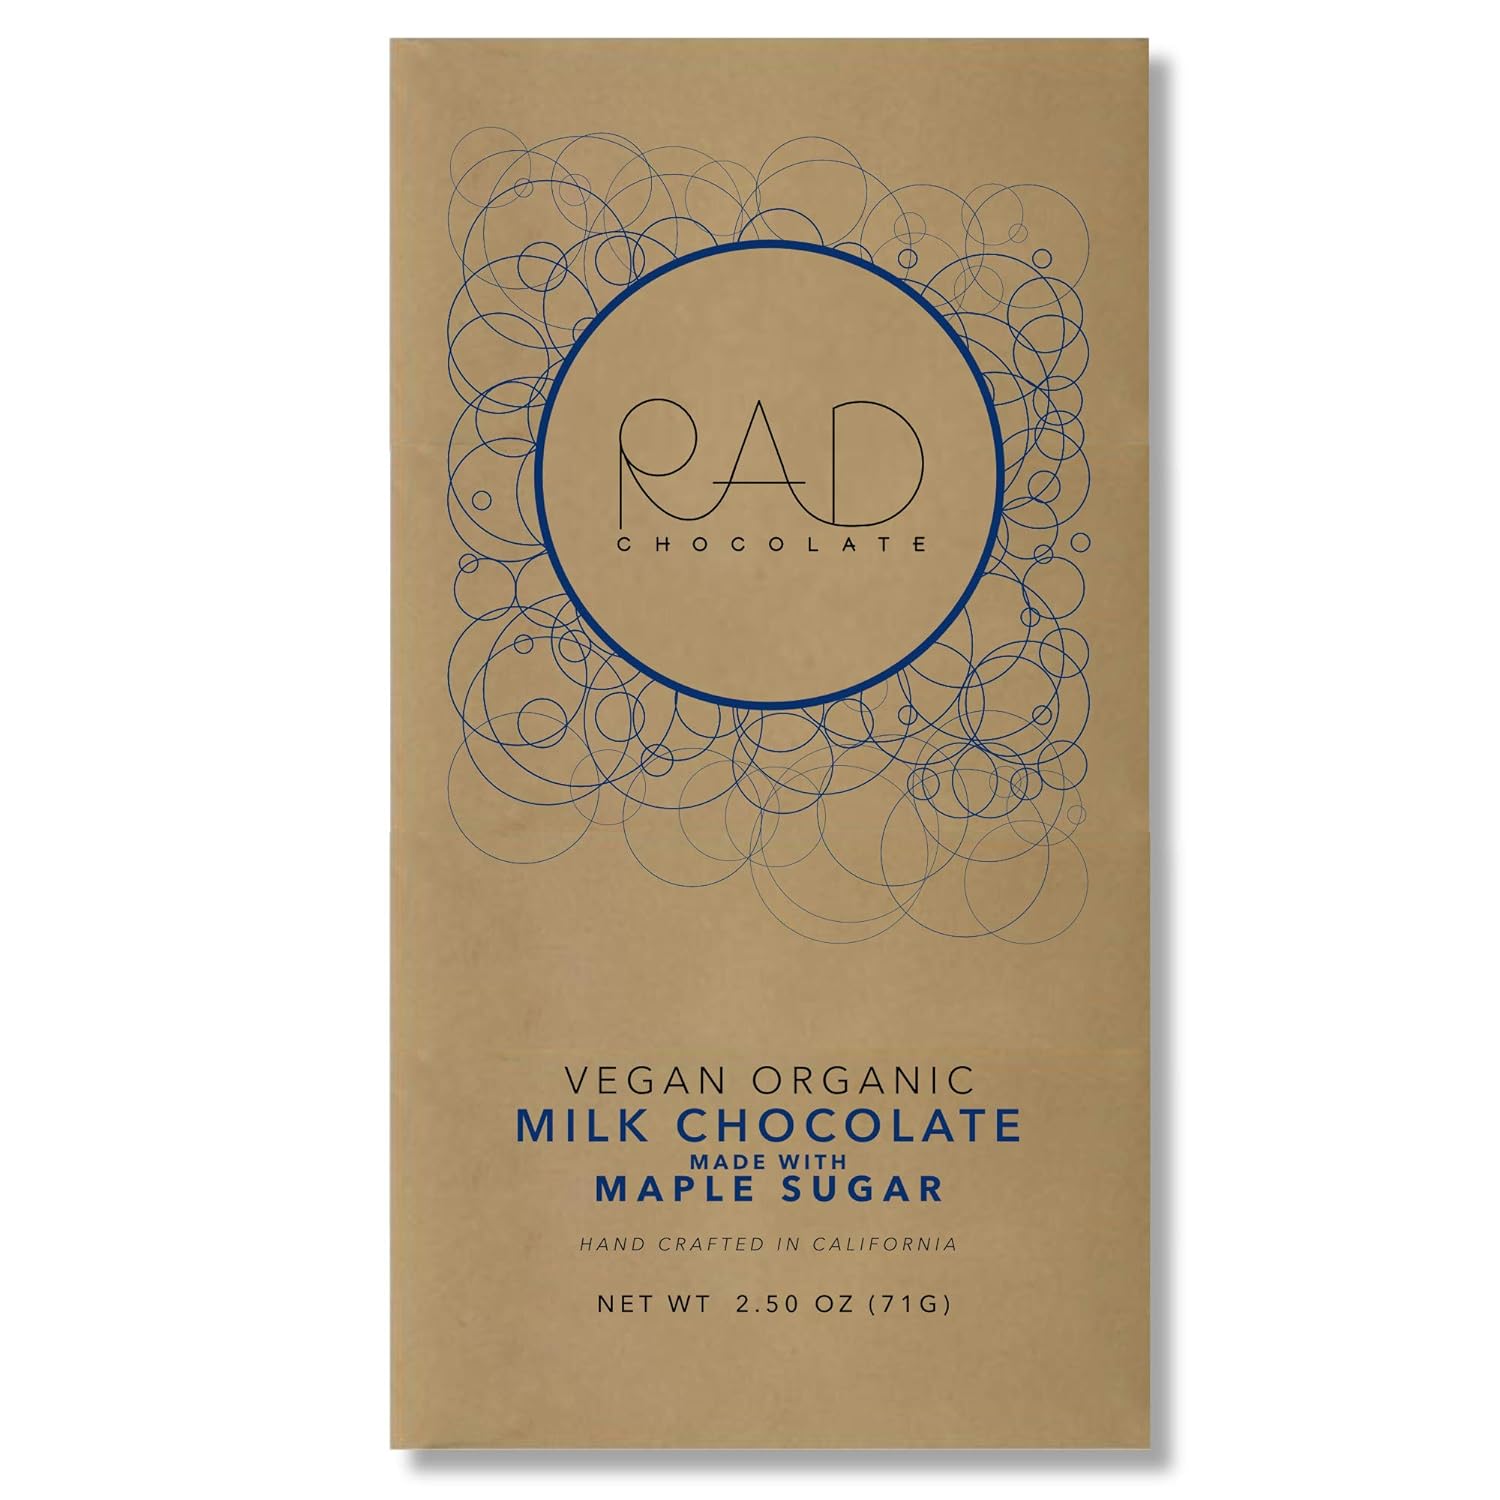  Rad Chocolate Vegan Milk Chocolate Maple Sugar | 3 pack | Certified Organic | Gluten & Soy Free Chocolate | Paleo Friendly